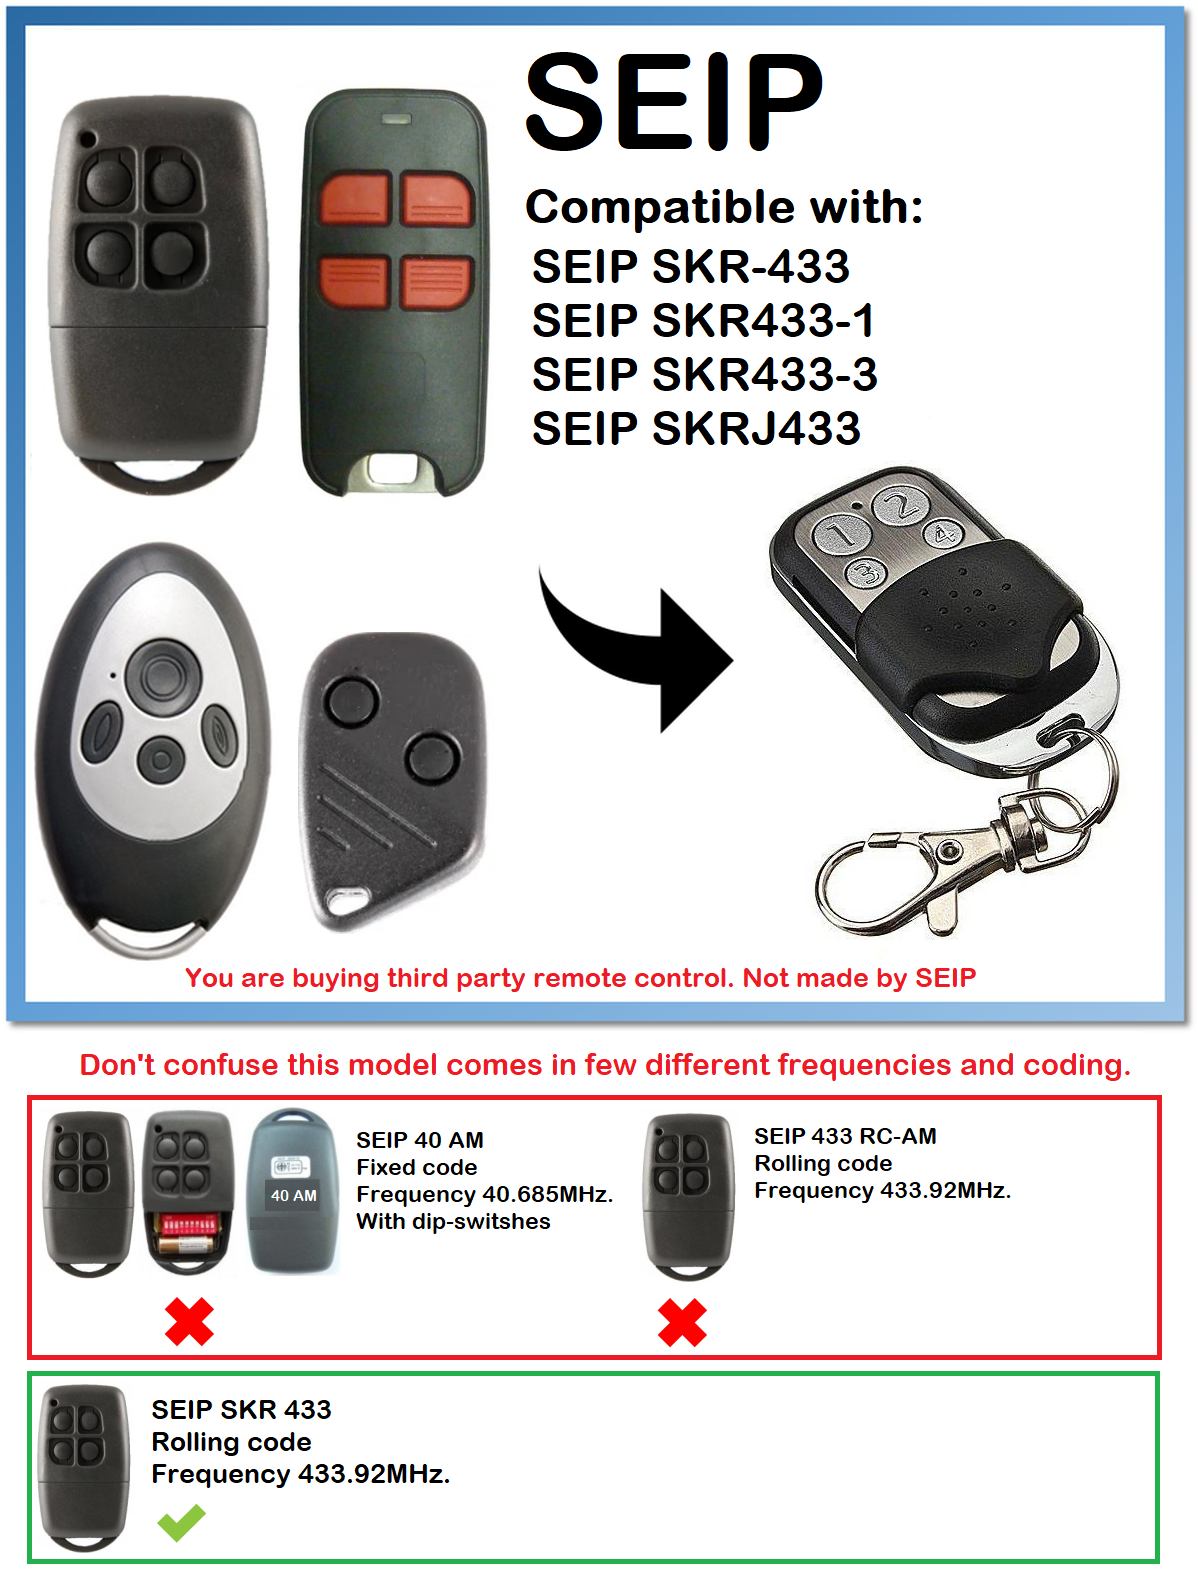 Seip ekr1mcg, ekr4md, ekr4sp439 Compatible remote control variab